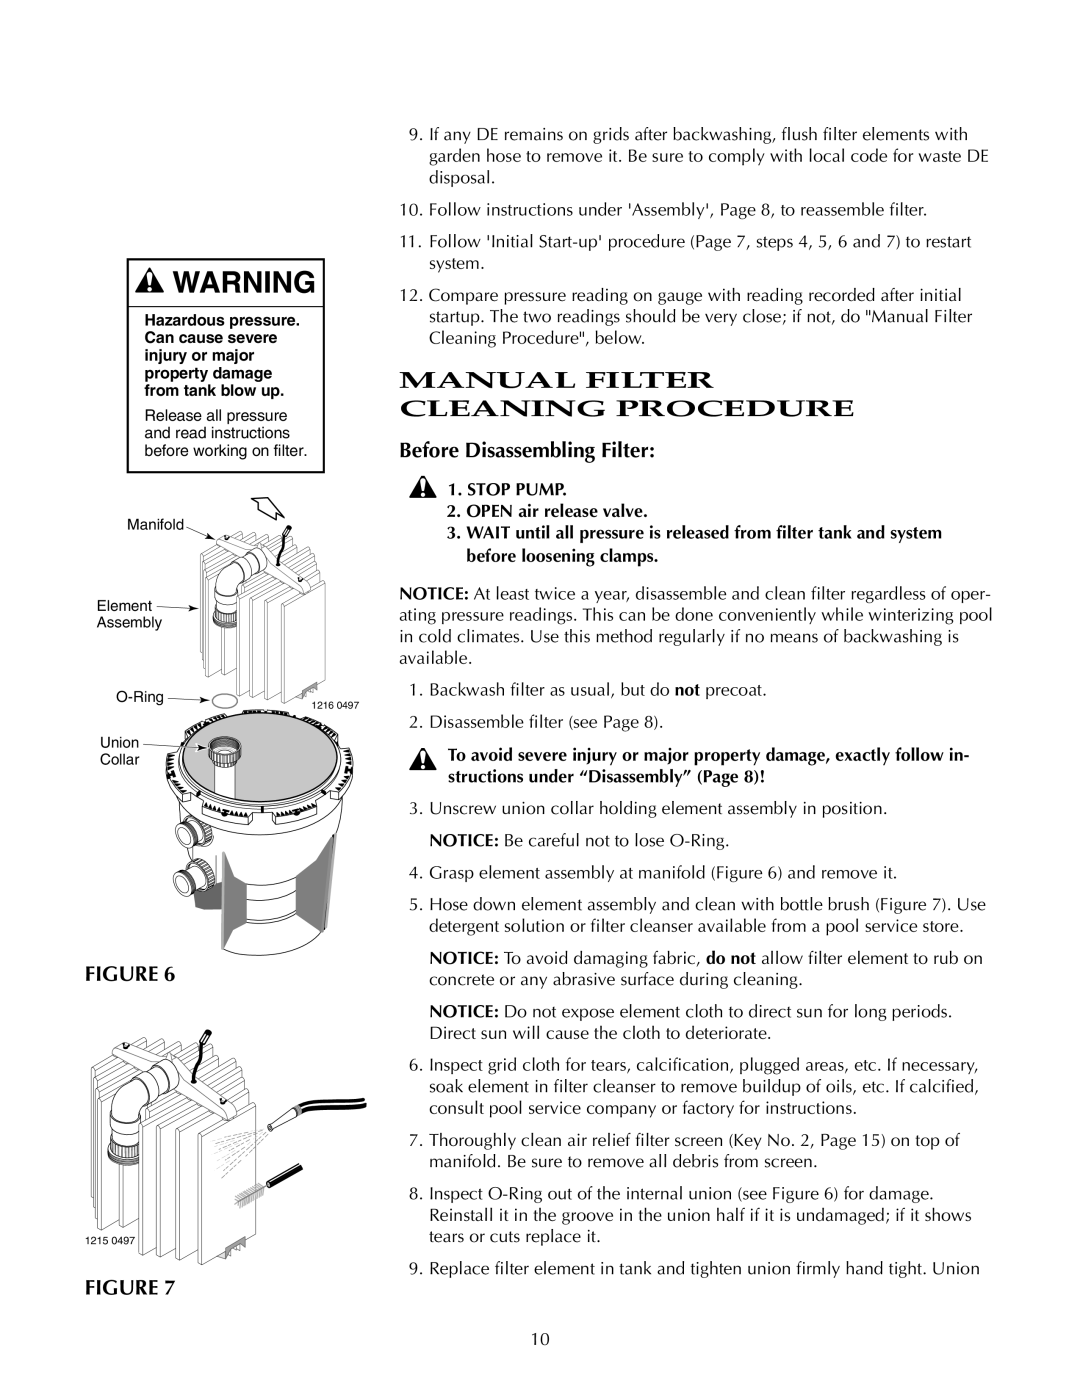 Pentair S8D110, S7D75 owner manual Manual Filter Cleaning Procedure, Before Disassembling Filter 